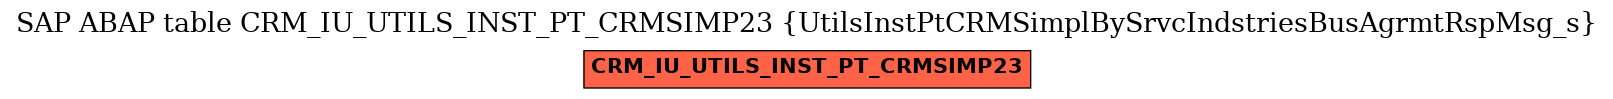 E-R Diagram for table CRM_IU_UTILS_INST_PT_CRMSIMP23 (UtilsInstPtCRMSimplBySrvcIndstriesBusAgrmtRspMsg_s)